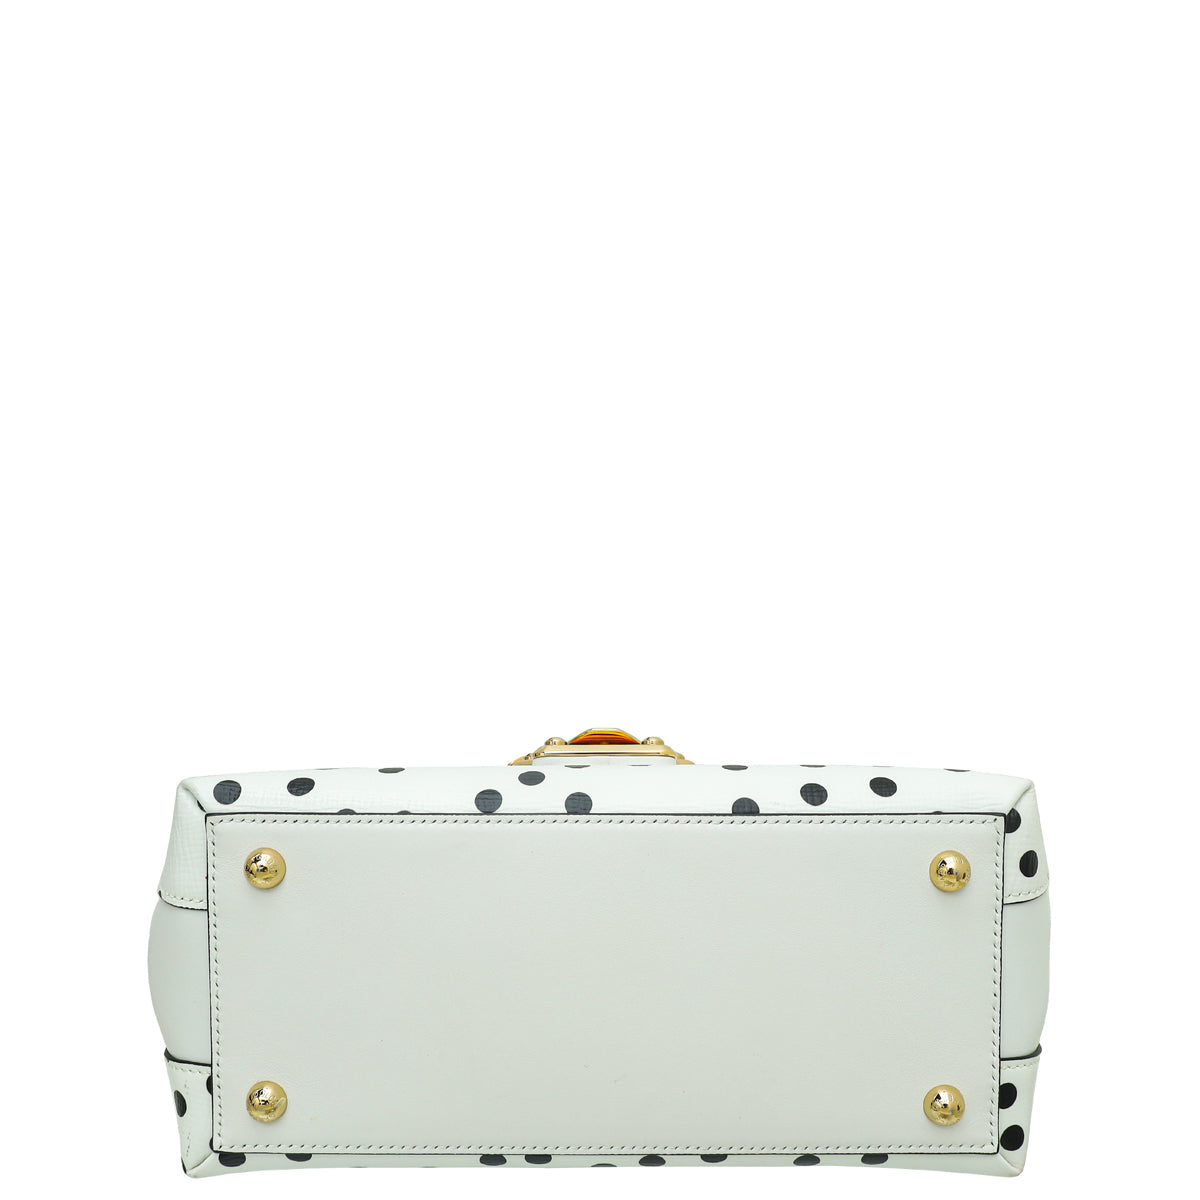 Dolce & Gabbana Bicolor Polka Dot Print Lucia Satchel Bag